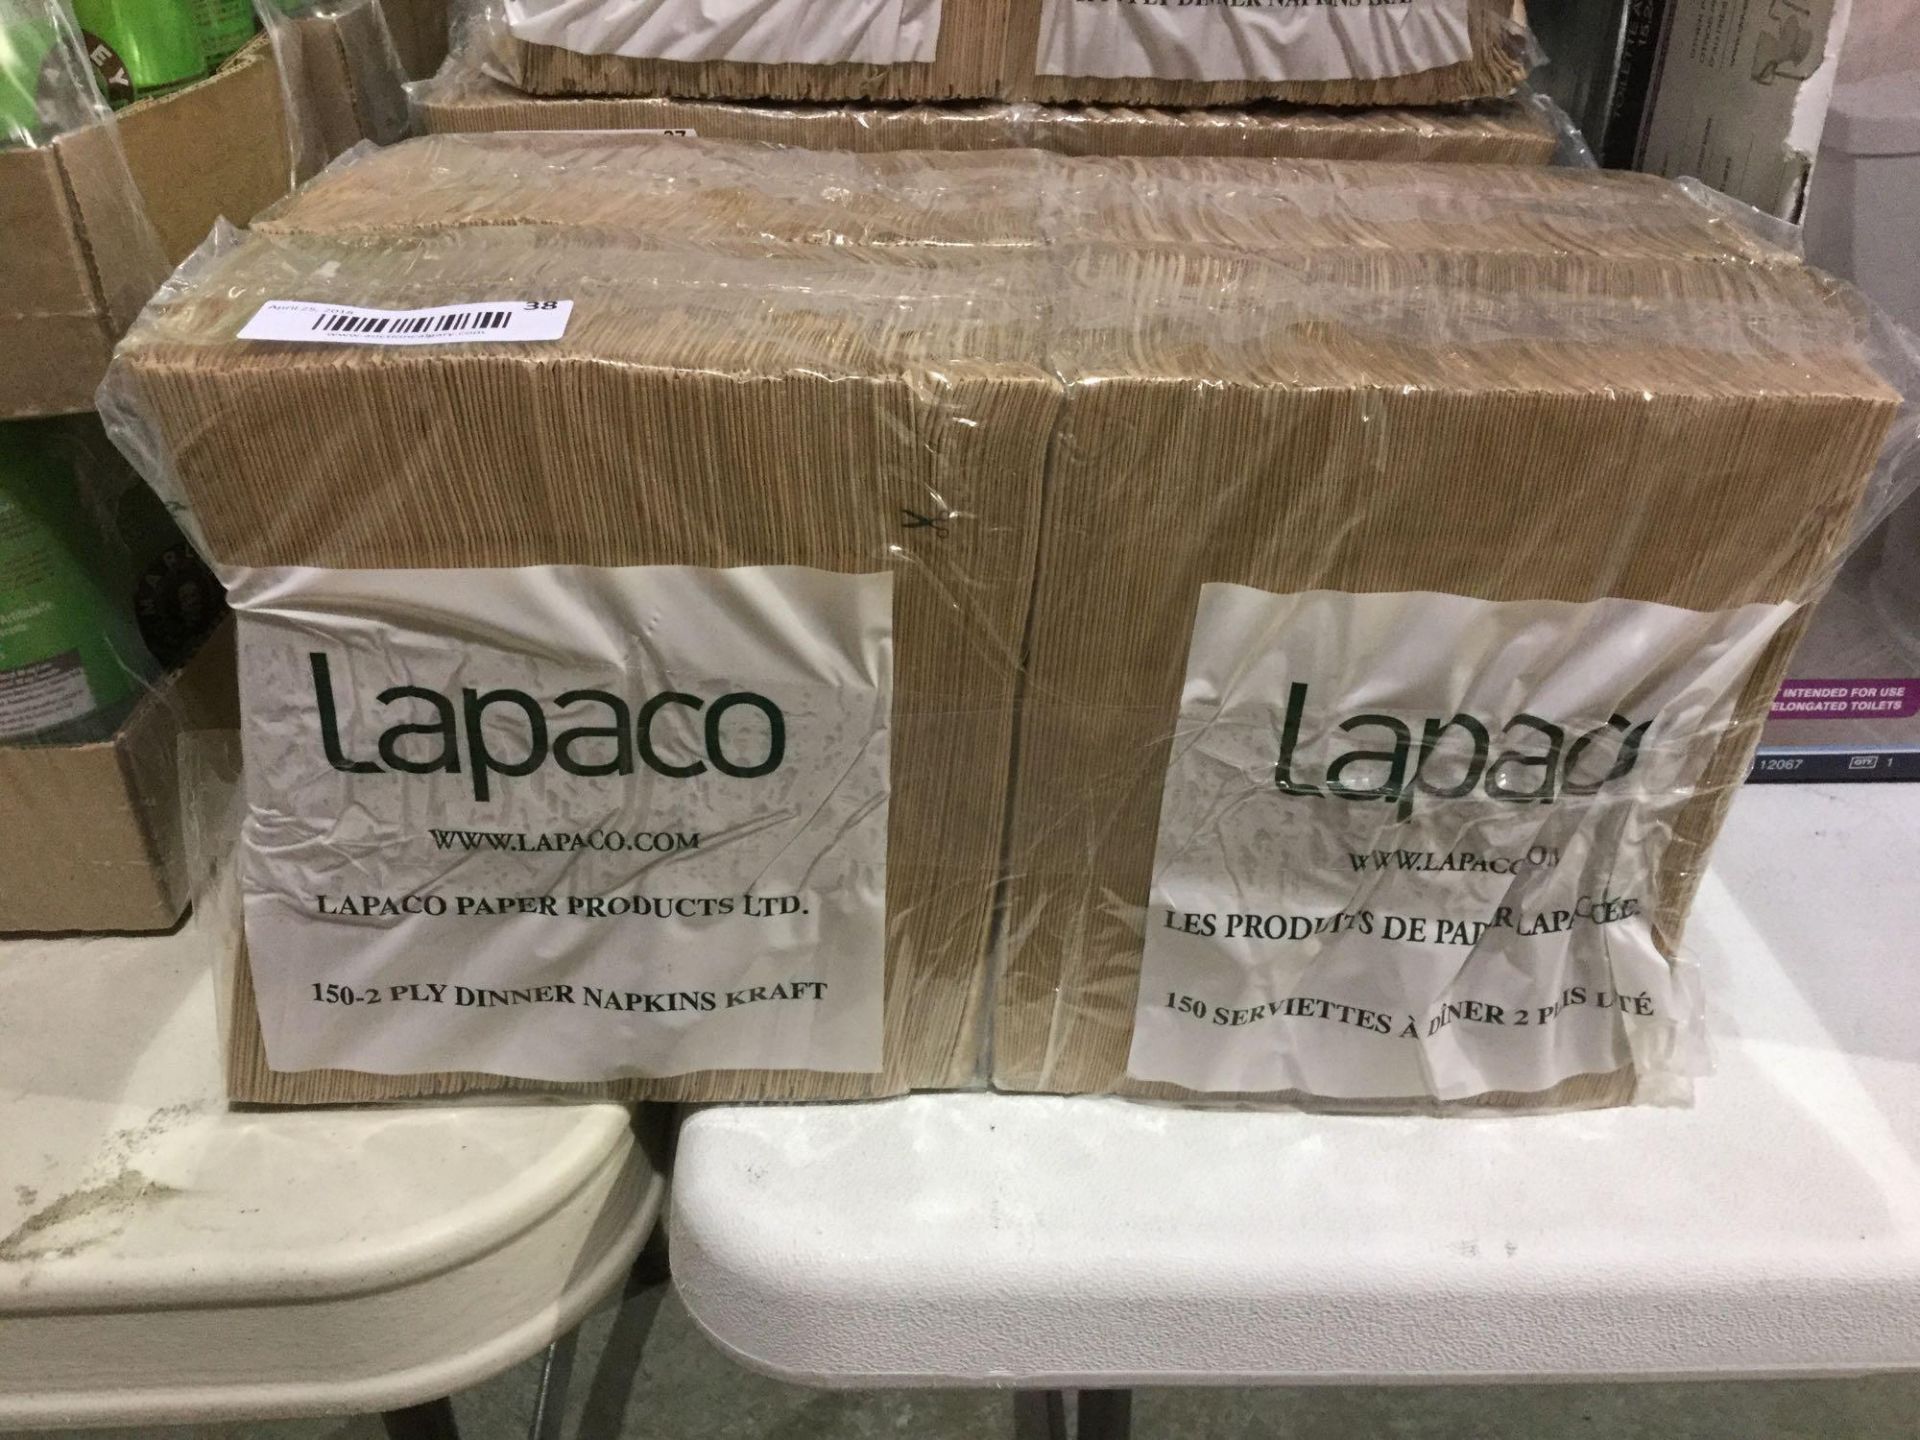 Lot of 4 x 150 Lapaco 2 ply Dinner napkins - Kraft